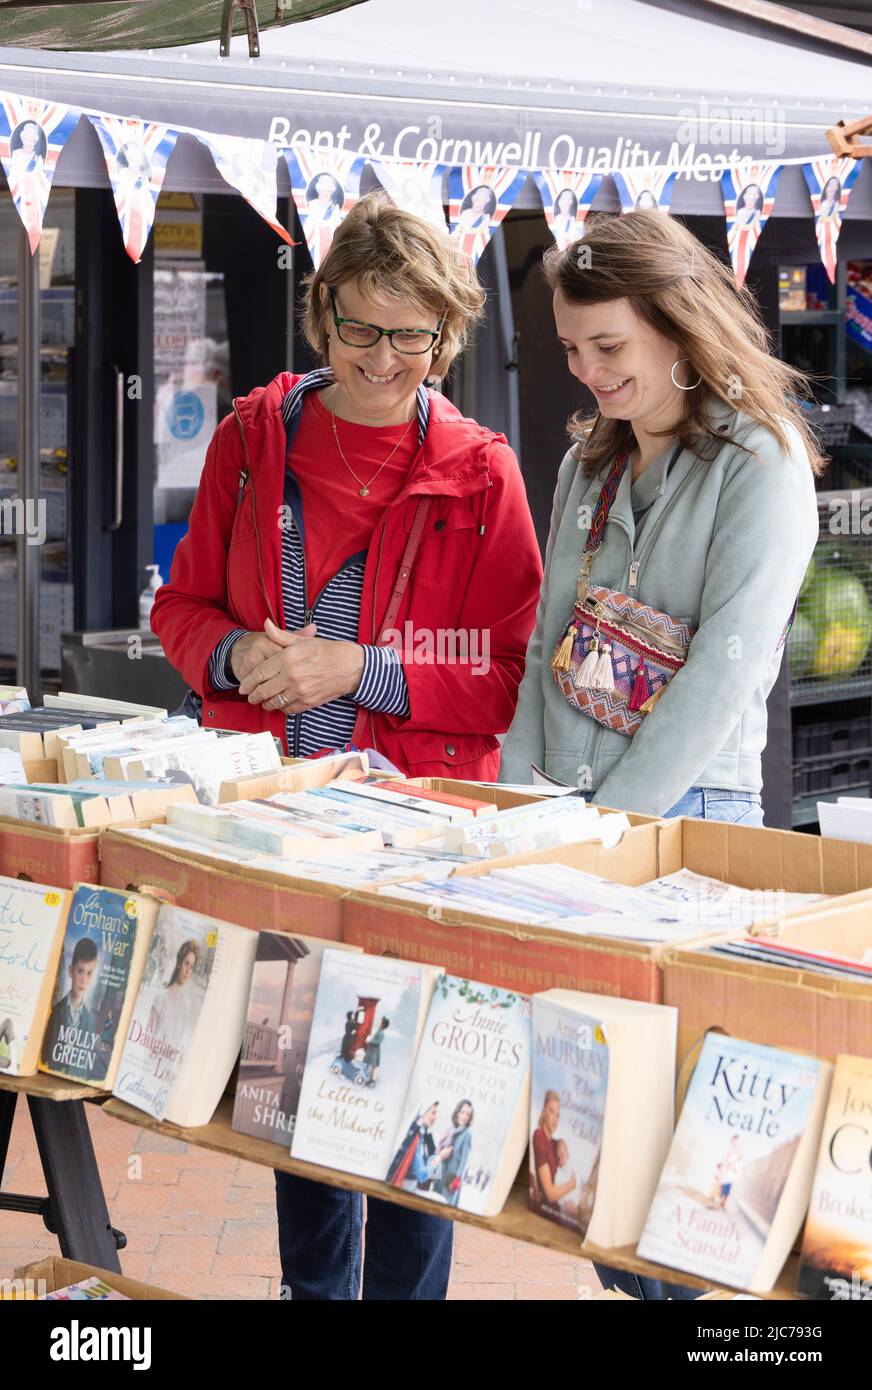 Market UK; Second hand book stall UK; two women buying second hand books at a market stall, Ely Market, Ely Cambridgeshire UK Stock Photo